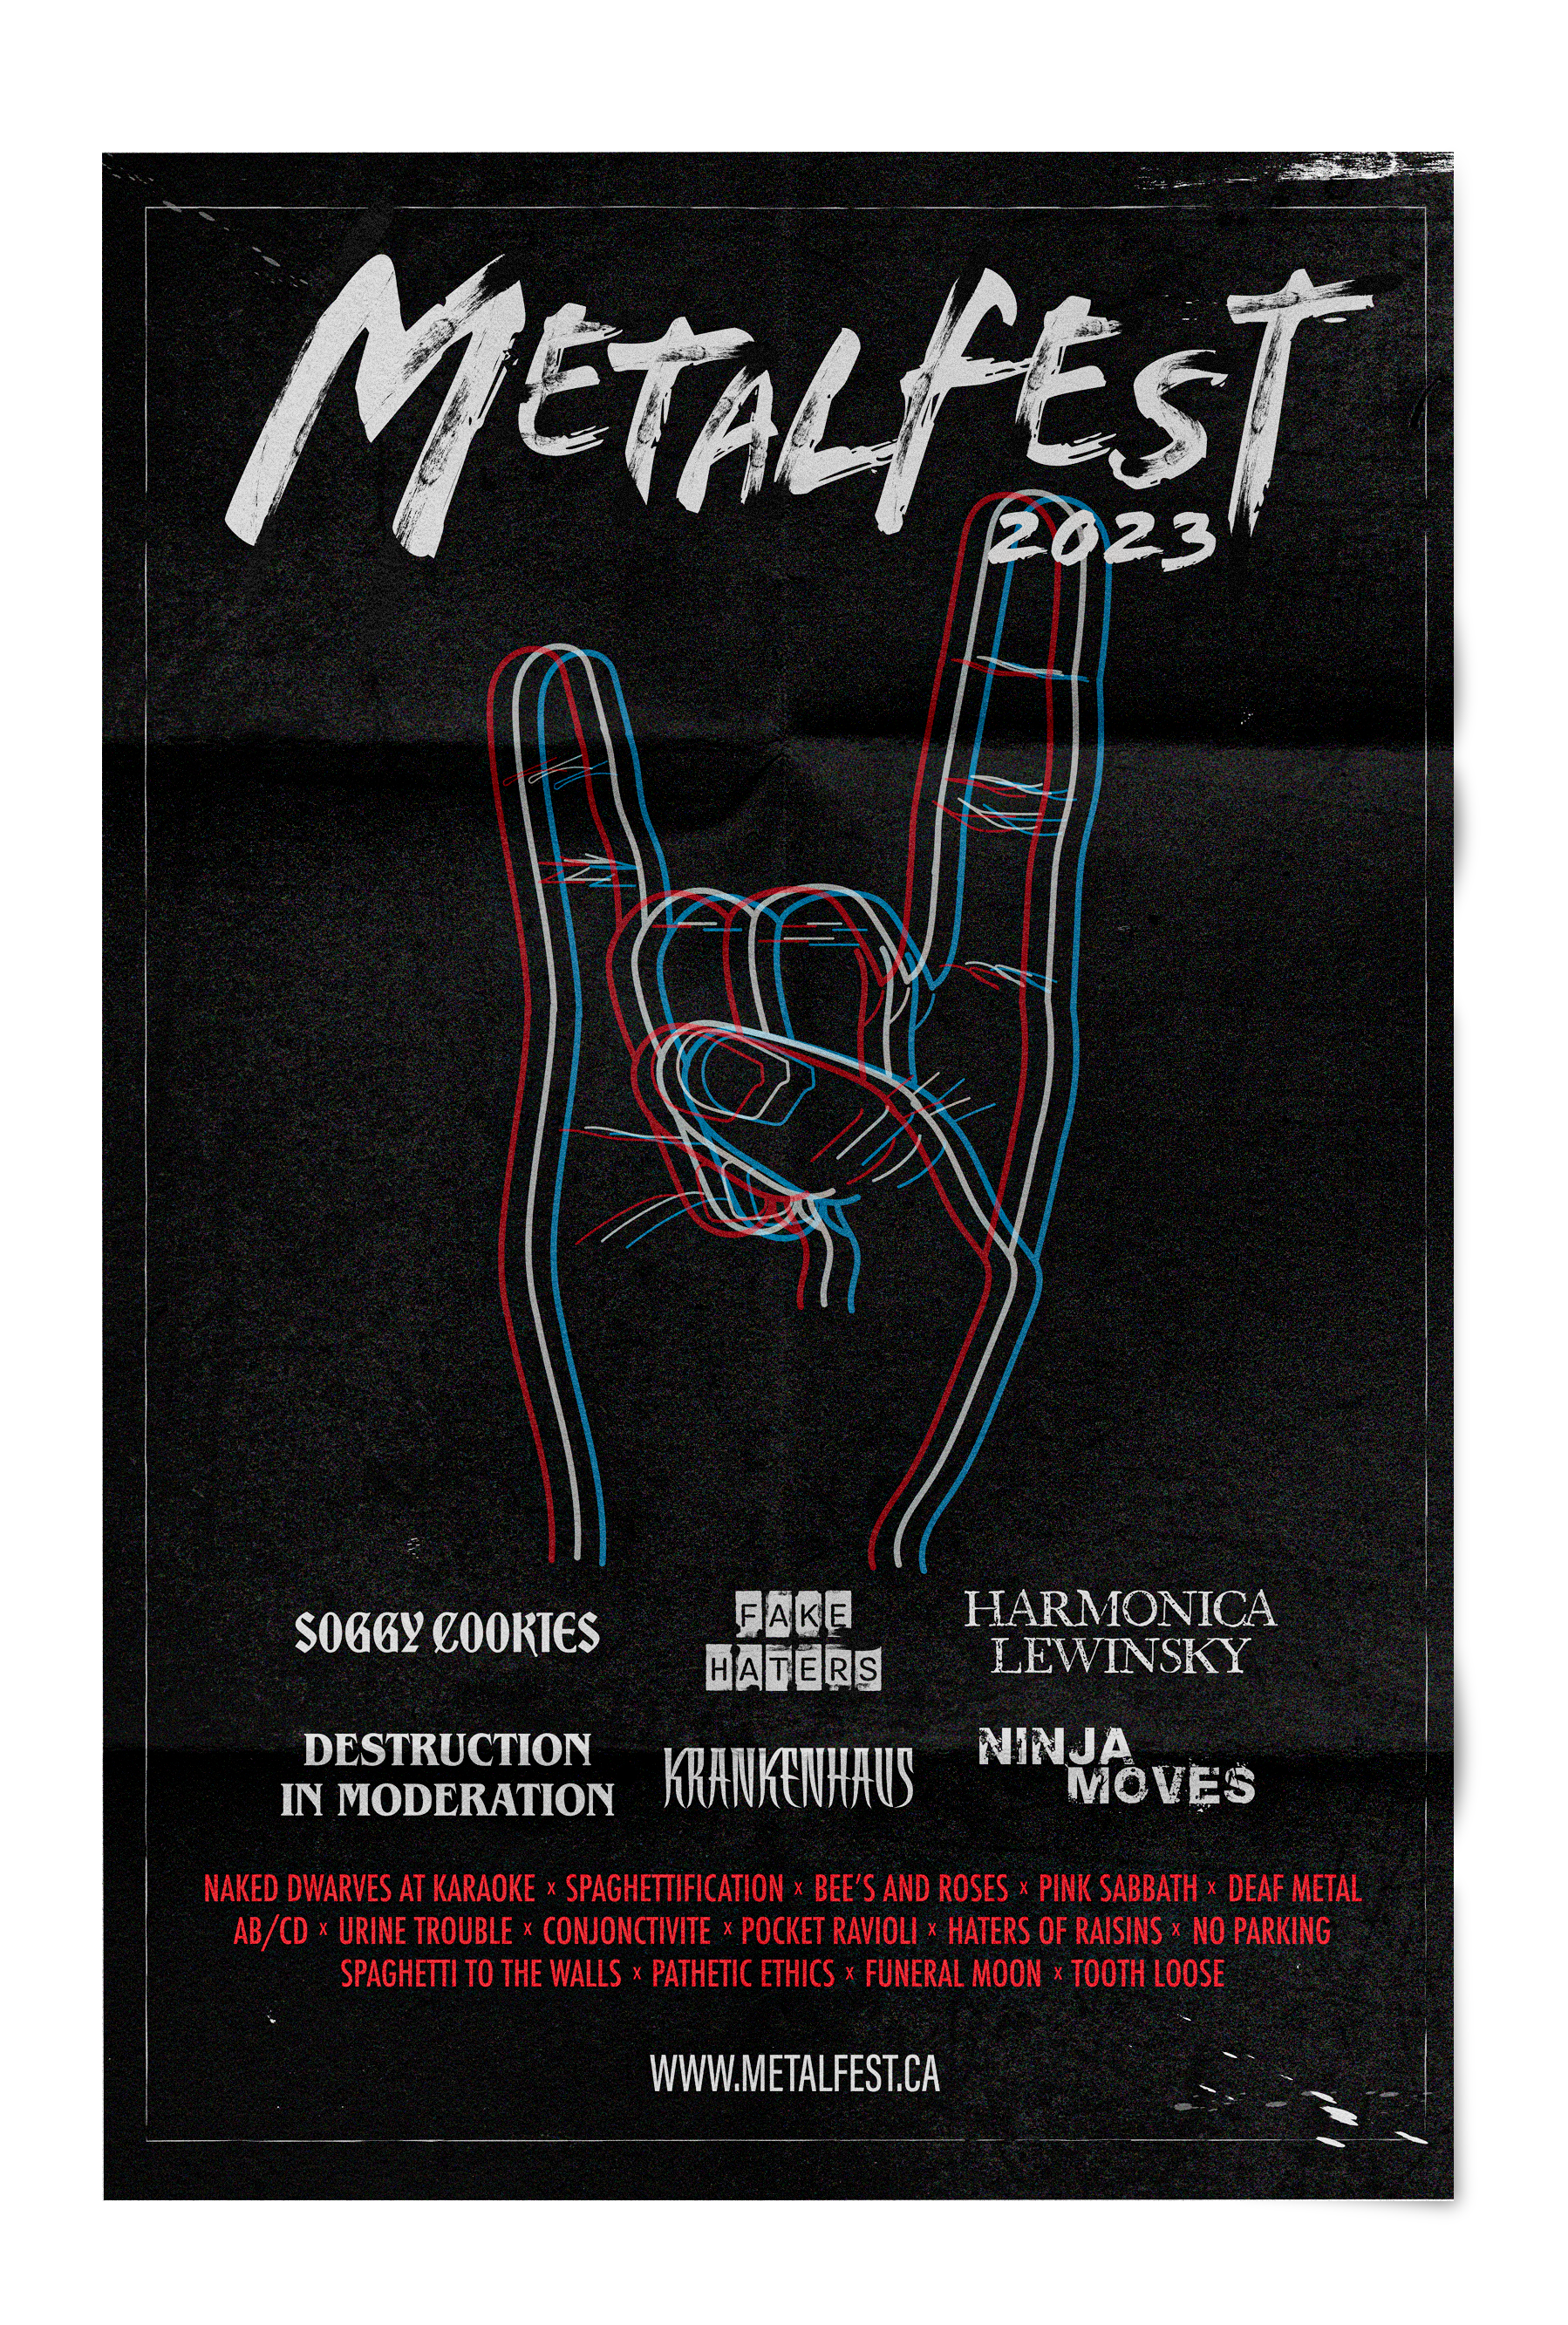 Metalfest 2023 affiche par Isabelle Botelho